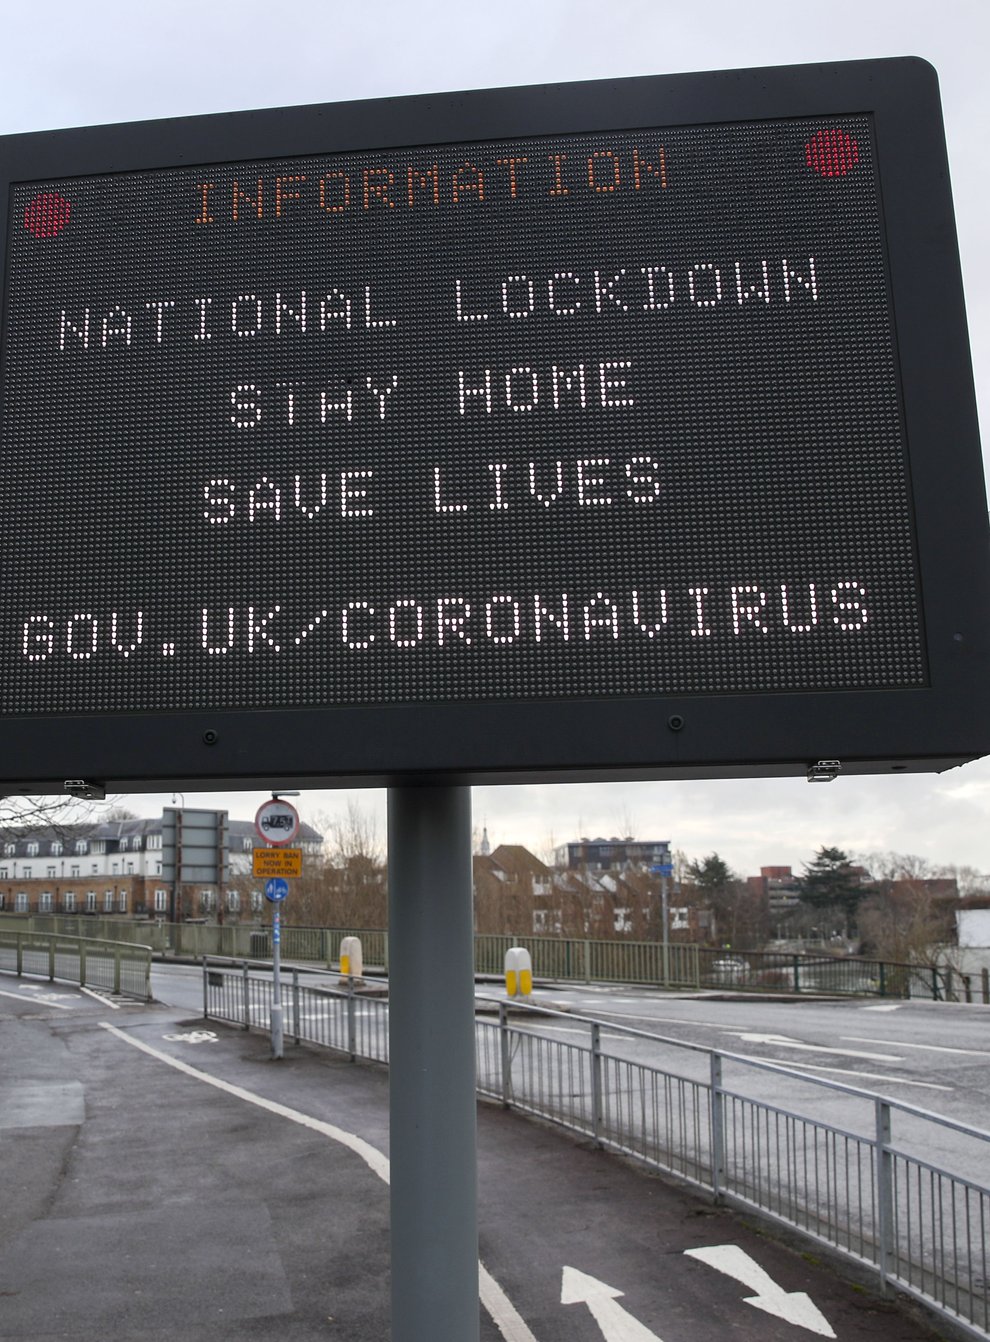 Coronavirus warning